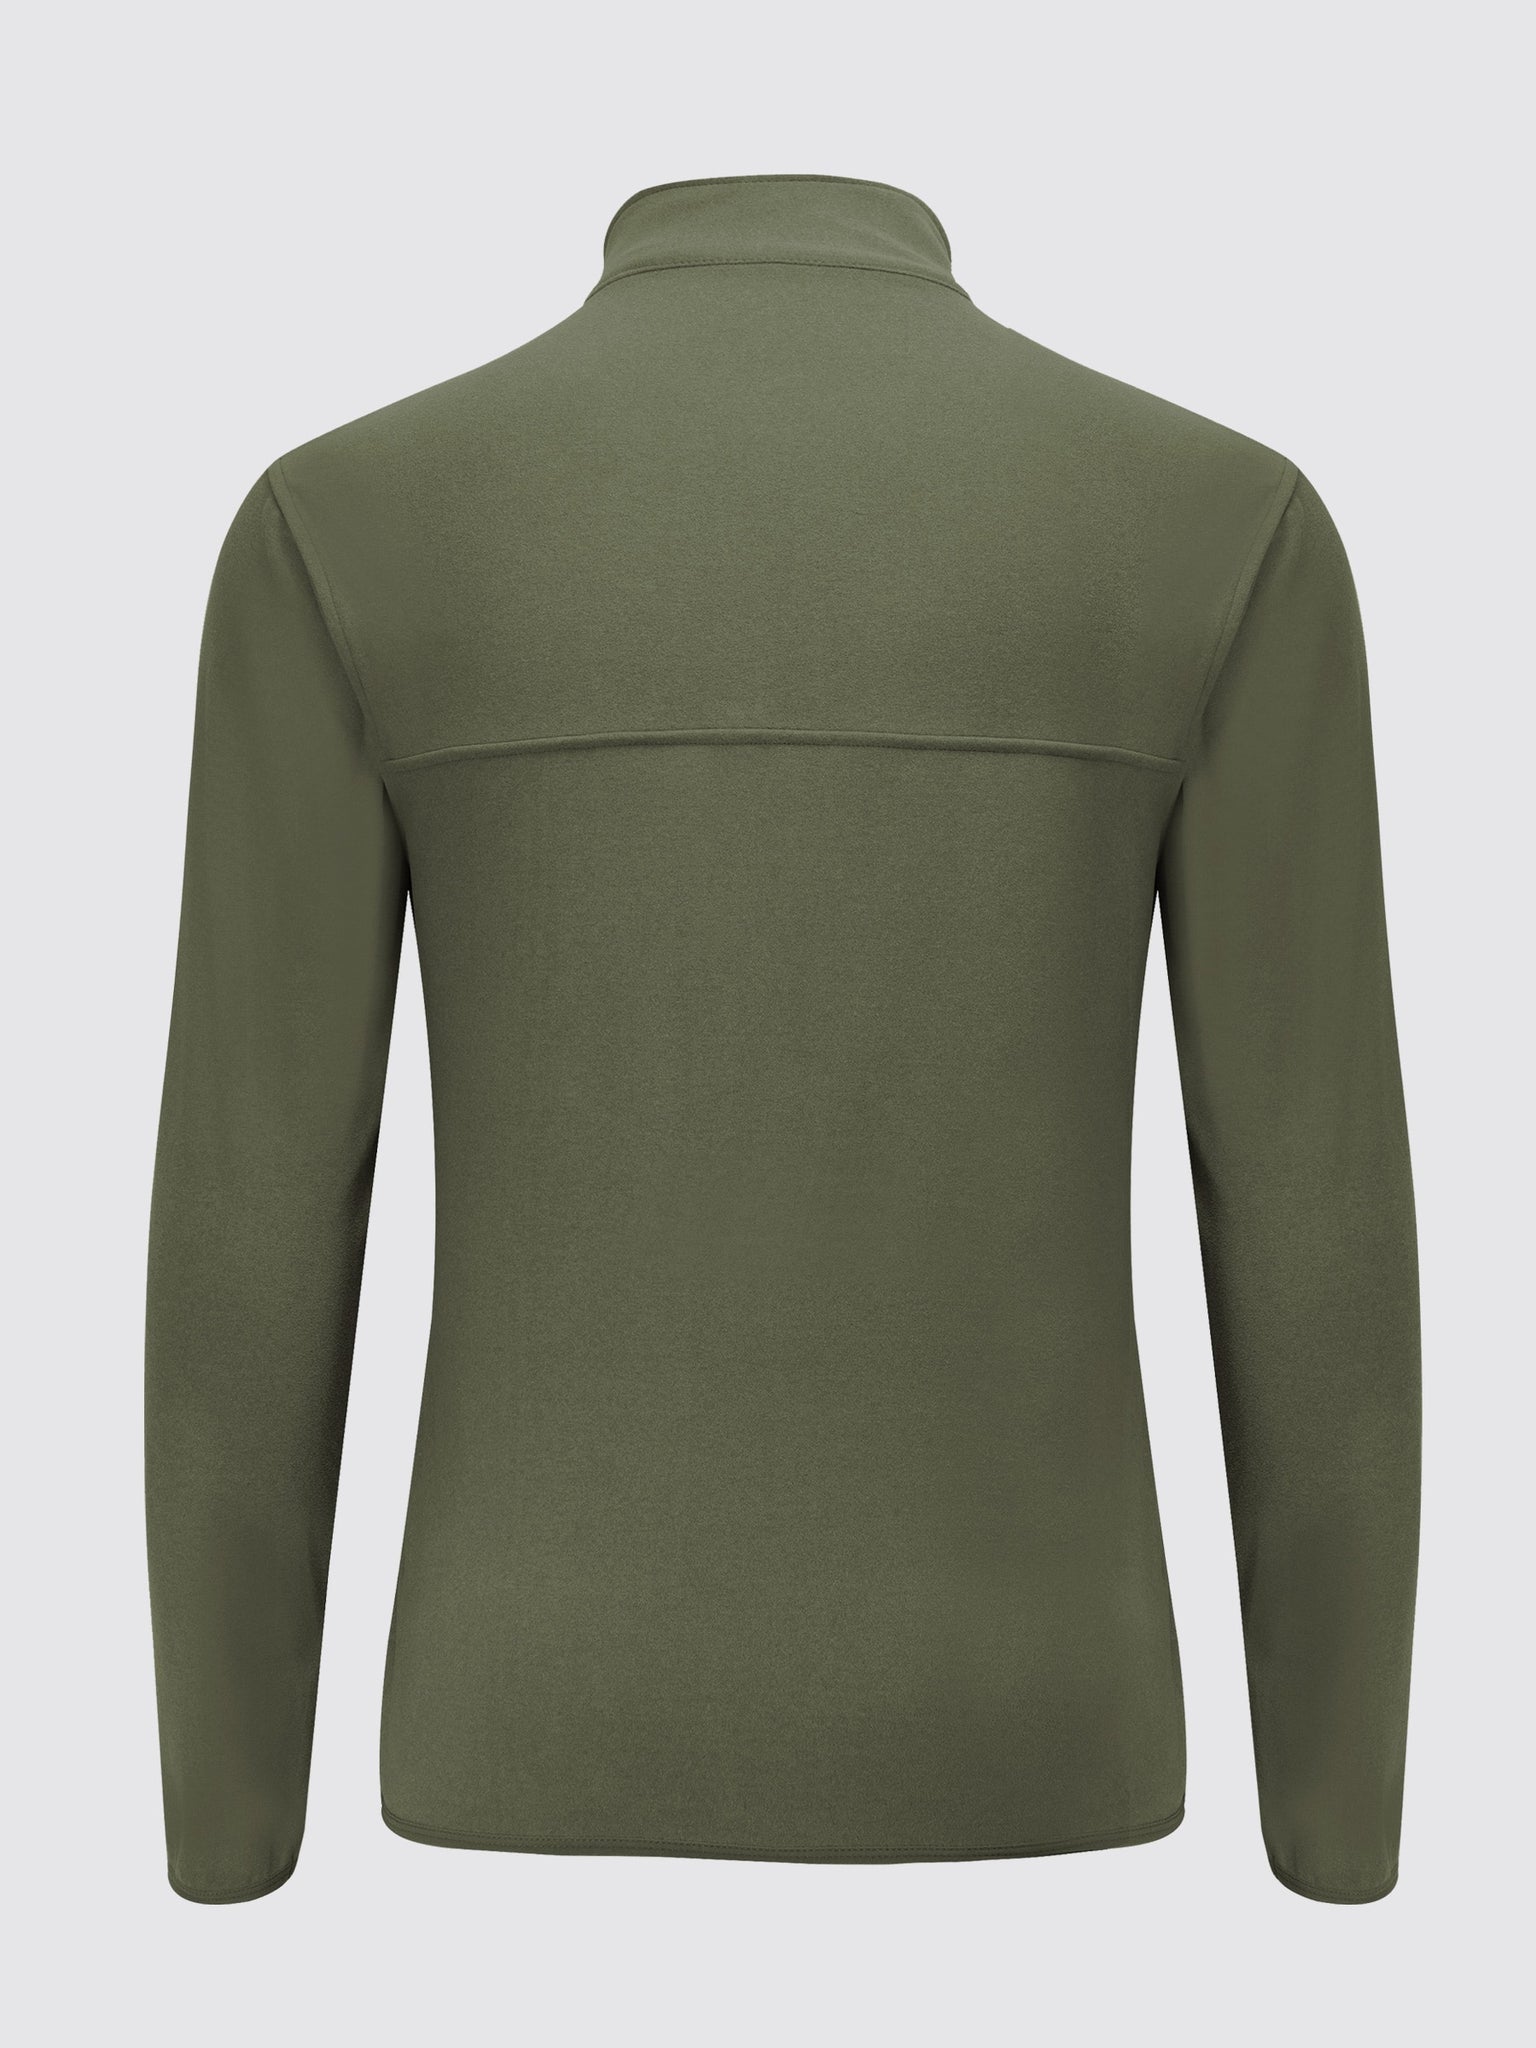 Willit Men's Fleece Pullover Lightweight Sportswear_Laydown_ArmyGreen4